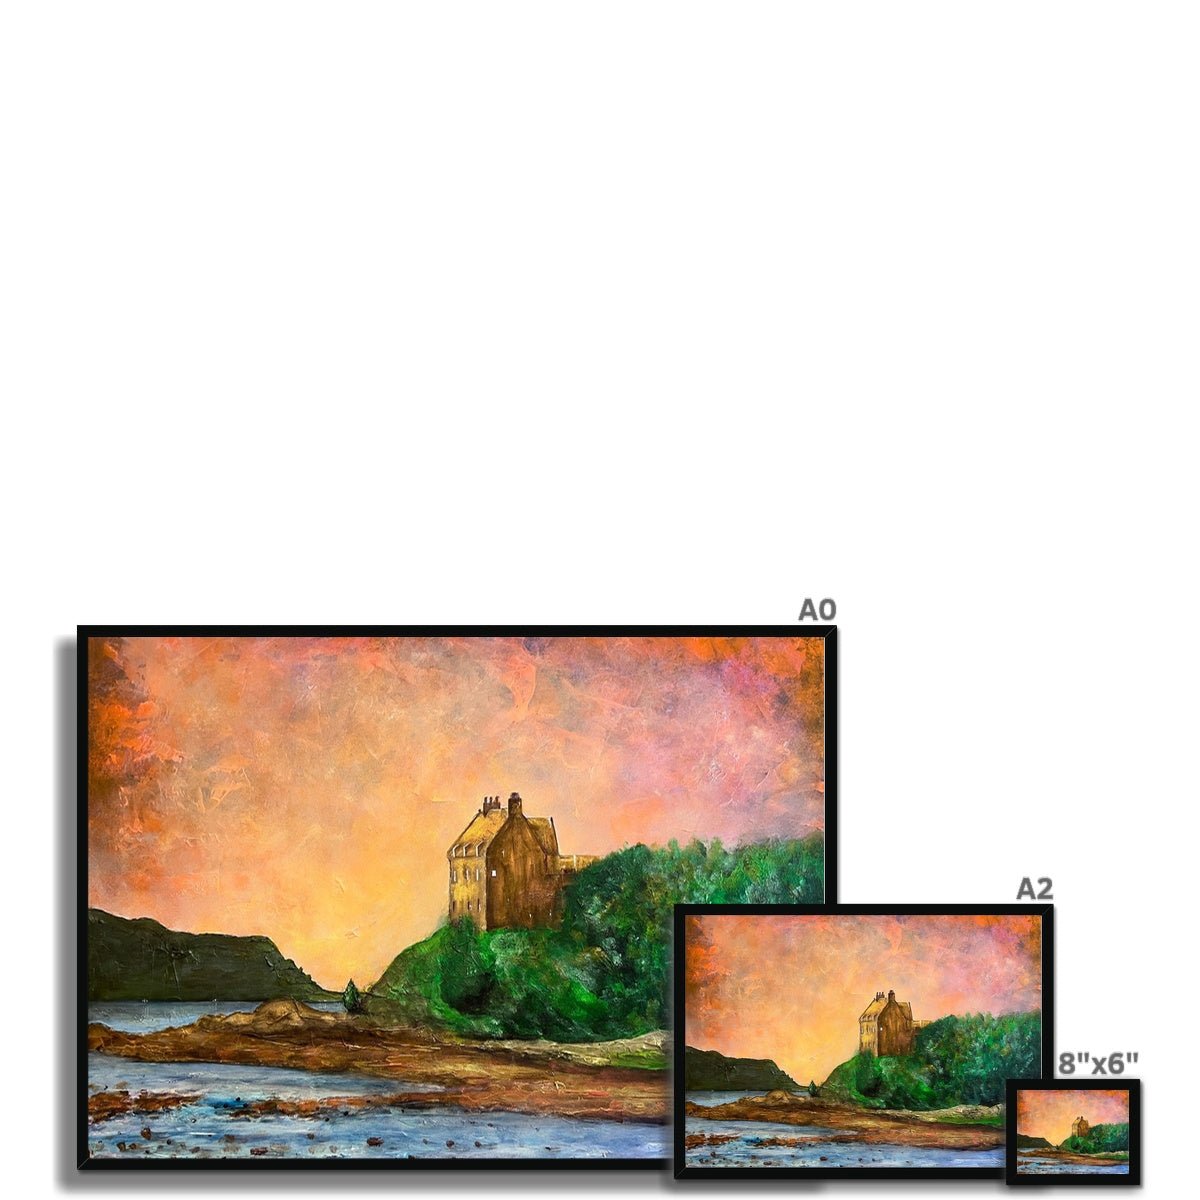 Duntrune Castle Painting | Framed Prints From Scotland-Framed Prints-Scottish Castles Art Gallery-Paintings, Prints, Homeware, Art Gifts From Scotland By Scottish Artist Kevin Hunter